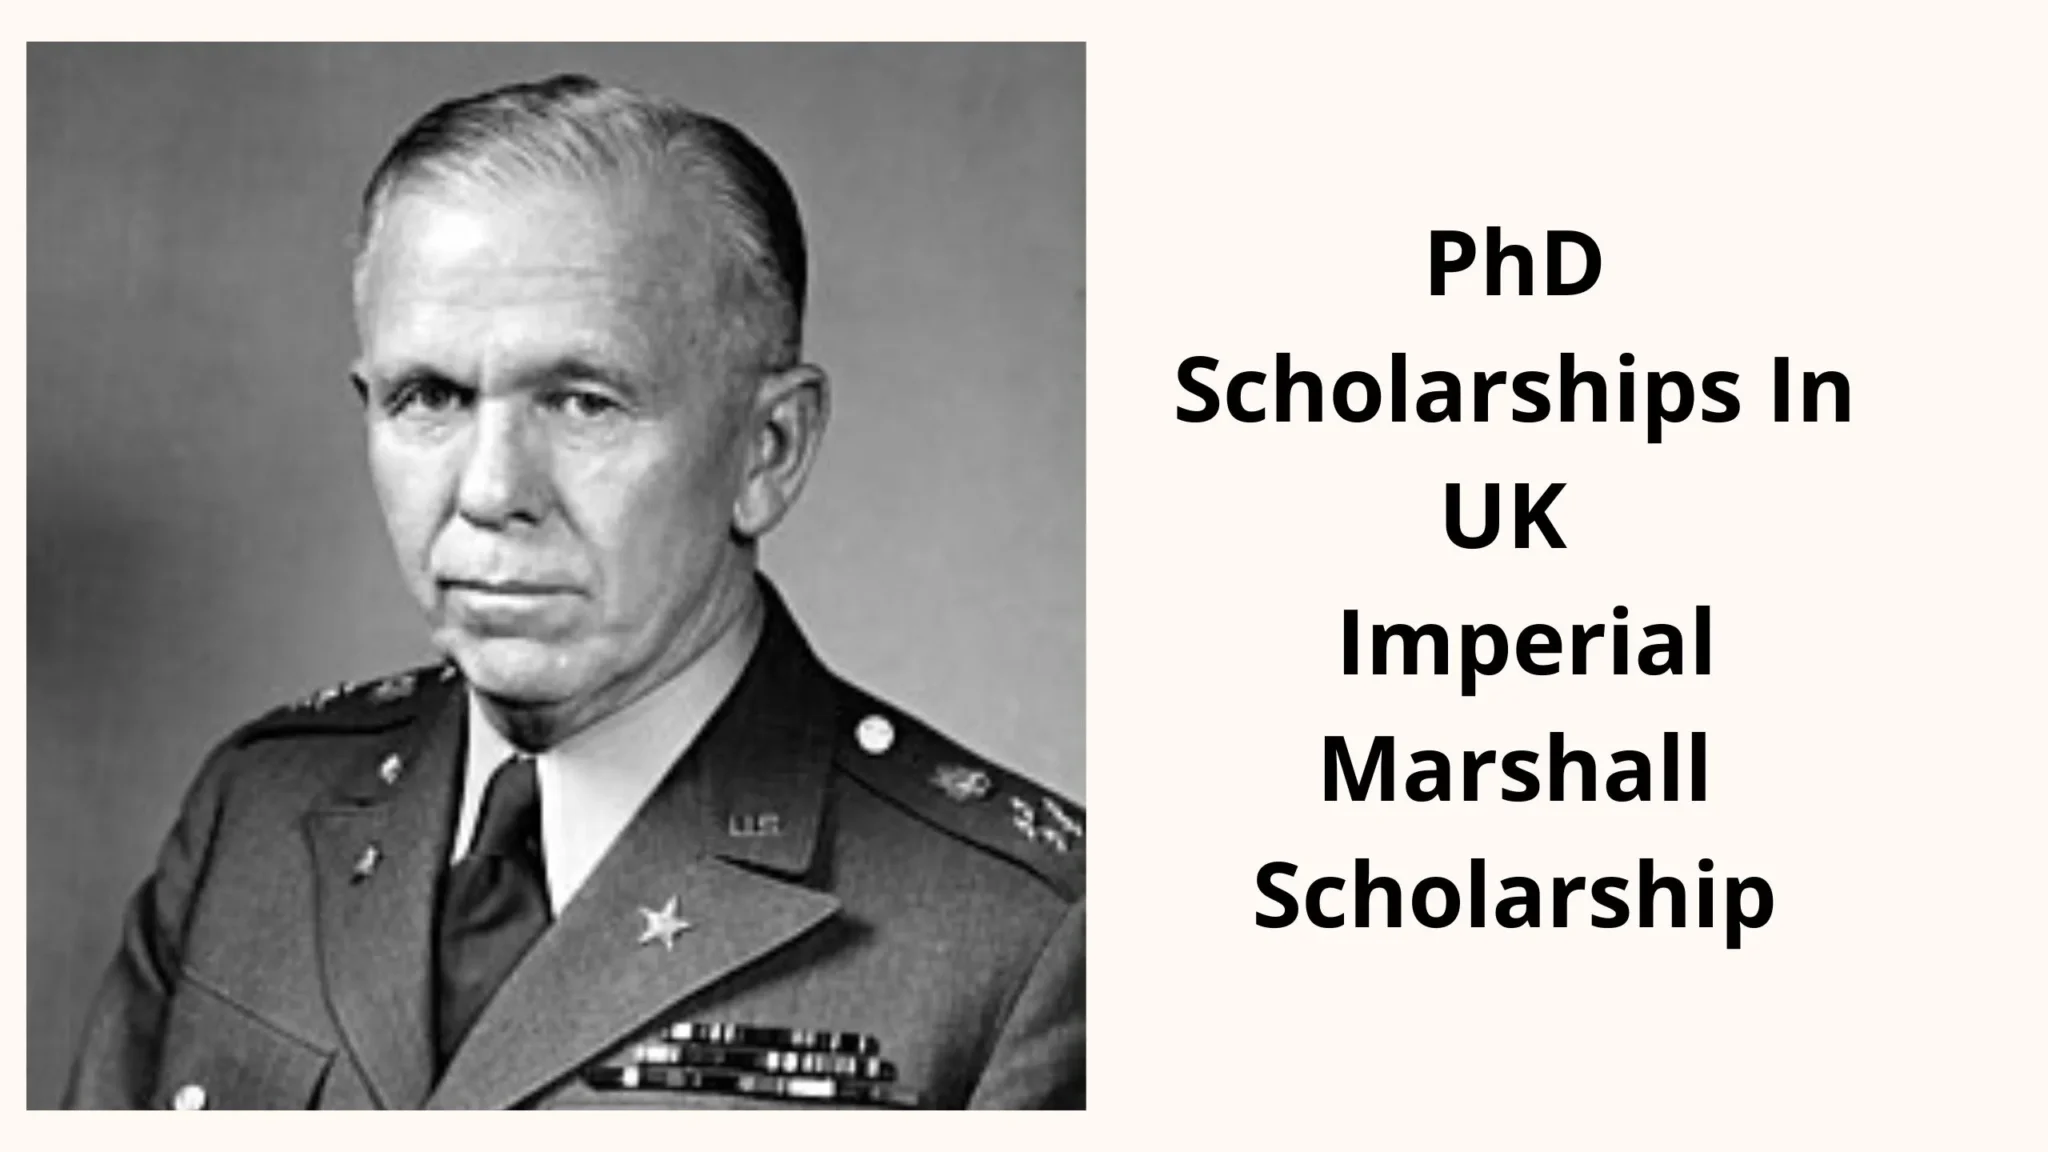 PhD Scholarships In UK Imperial Marshall Scholarship